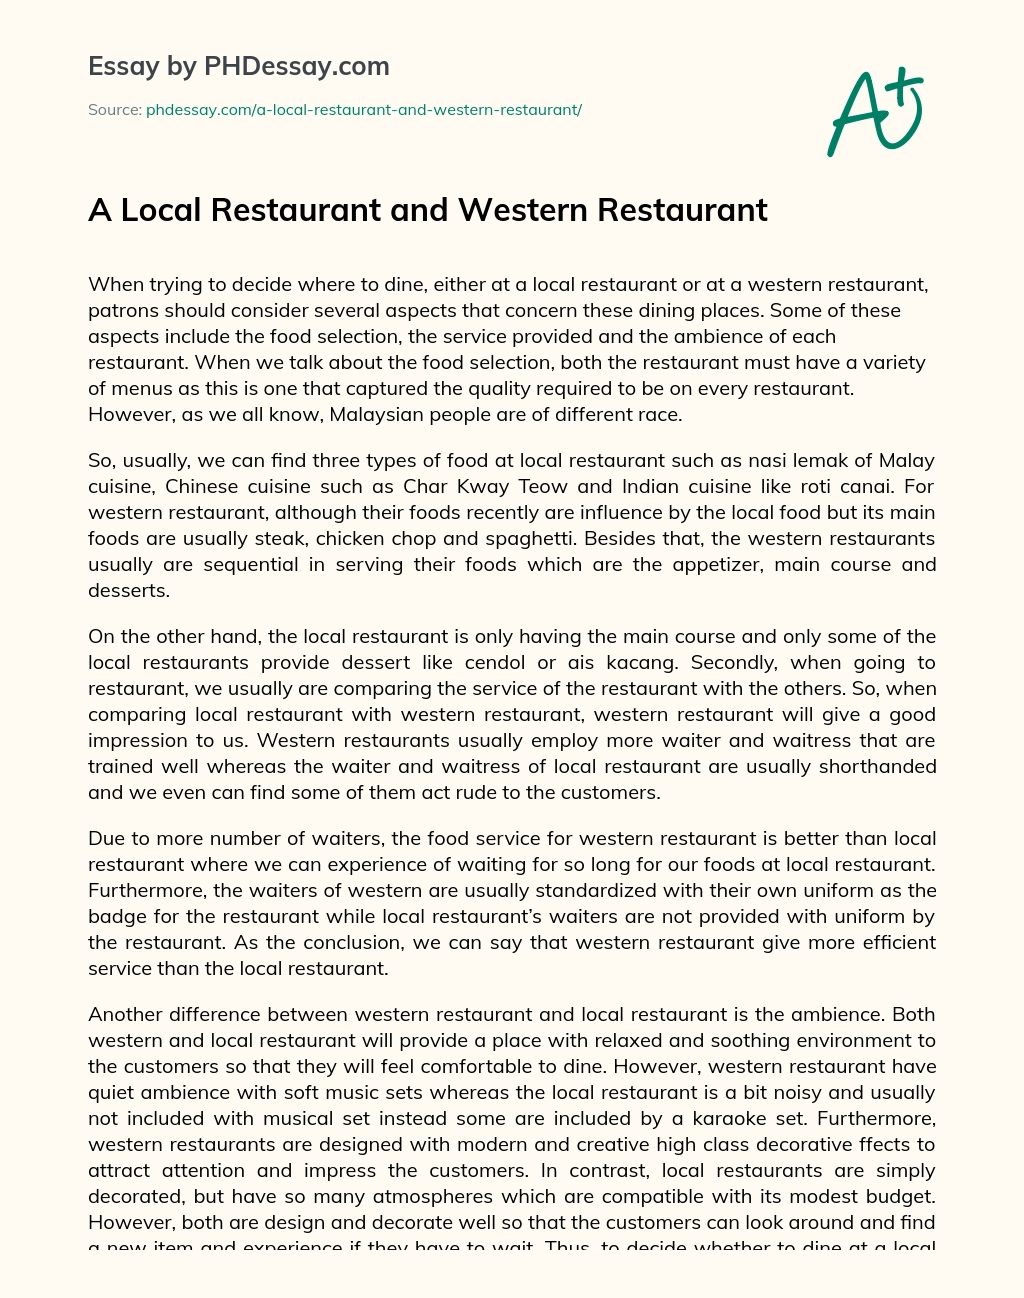 A Local Restaurant and Western Restaurant essay